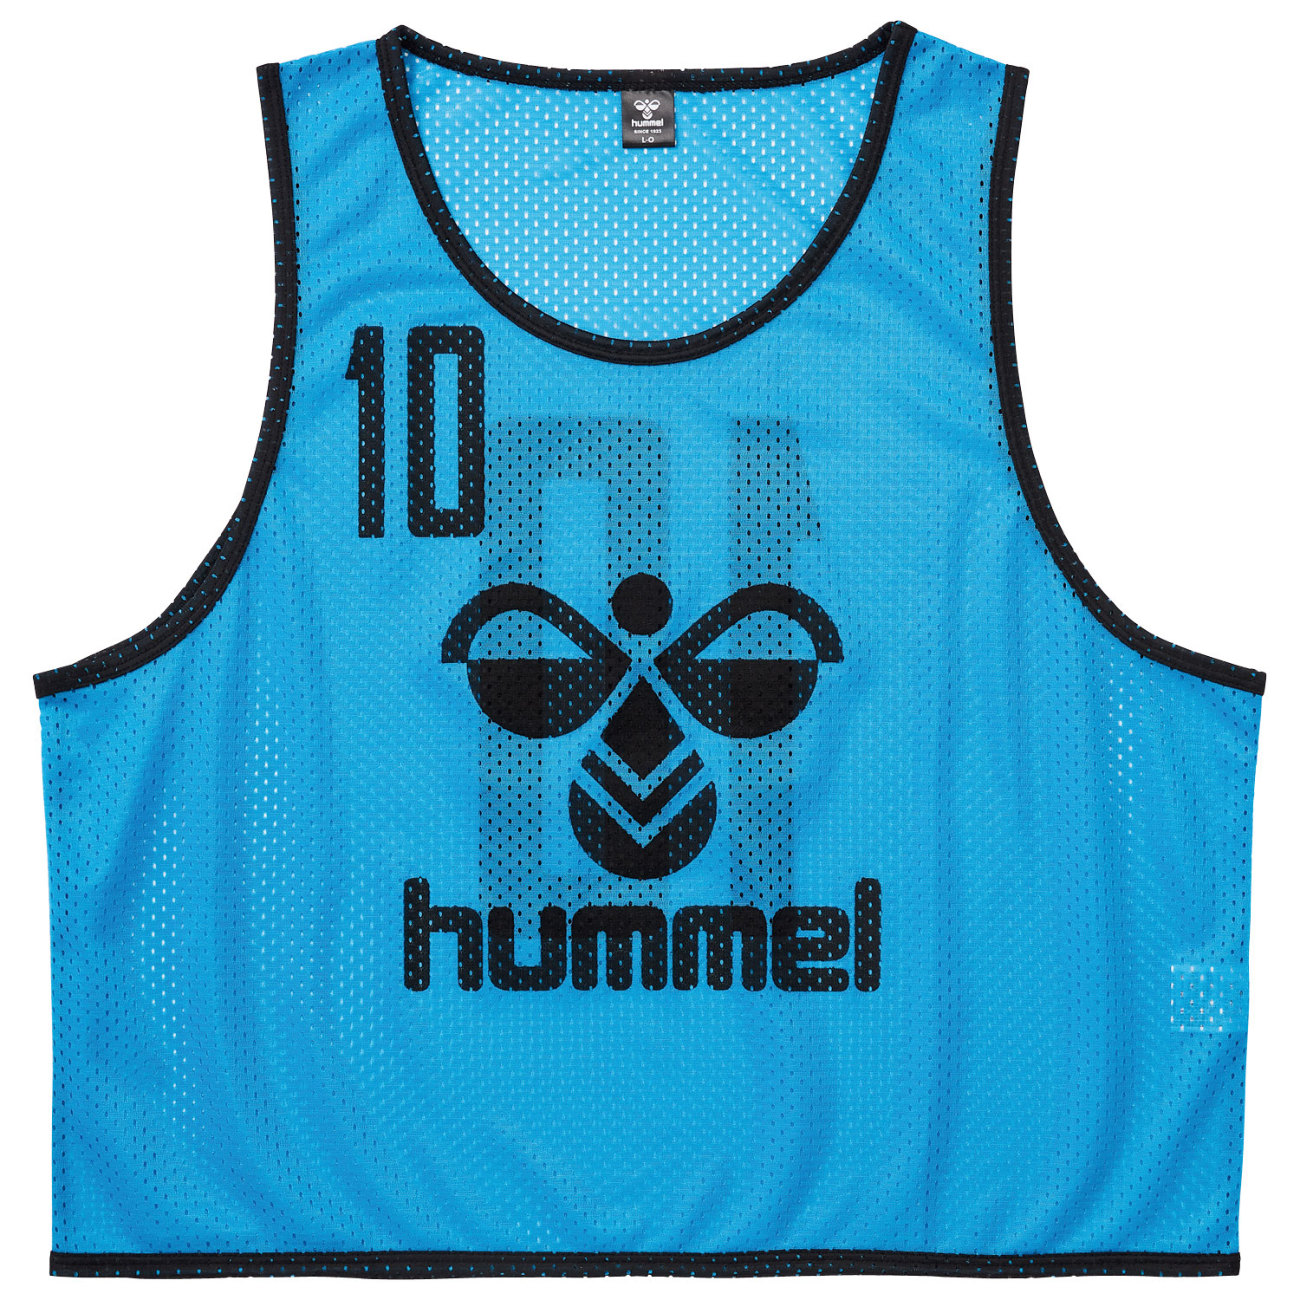 hummel(ヒュンメル)-S ジュニアトレーニングビブス(10枚セット